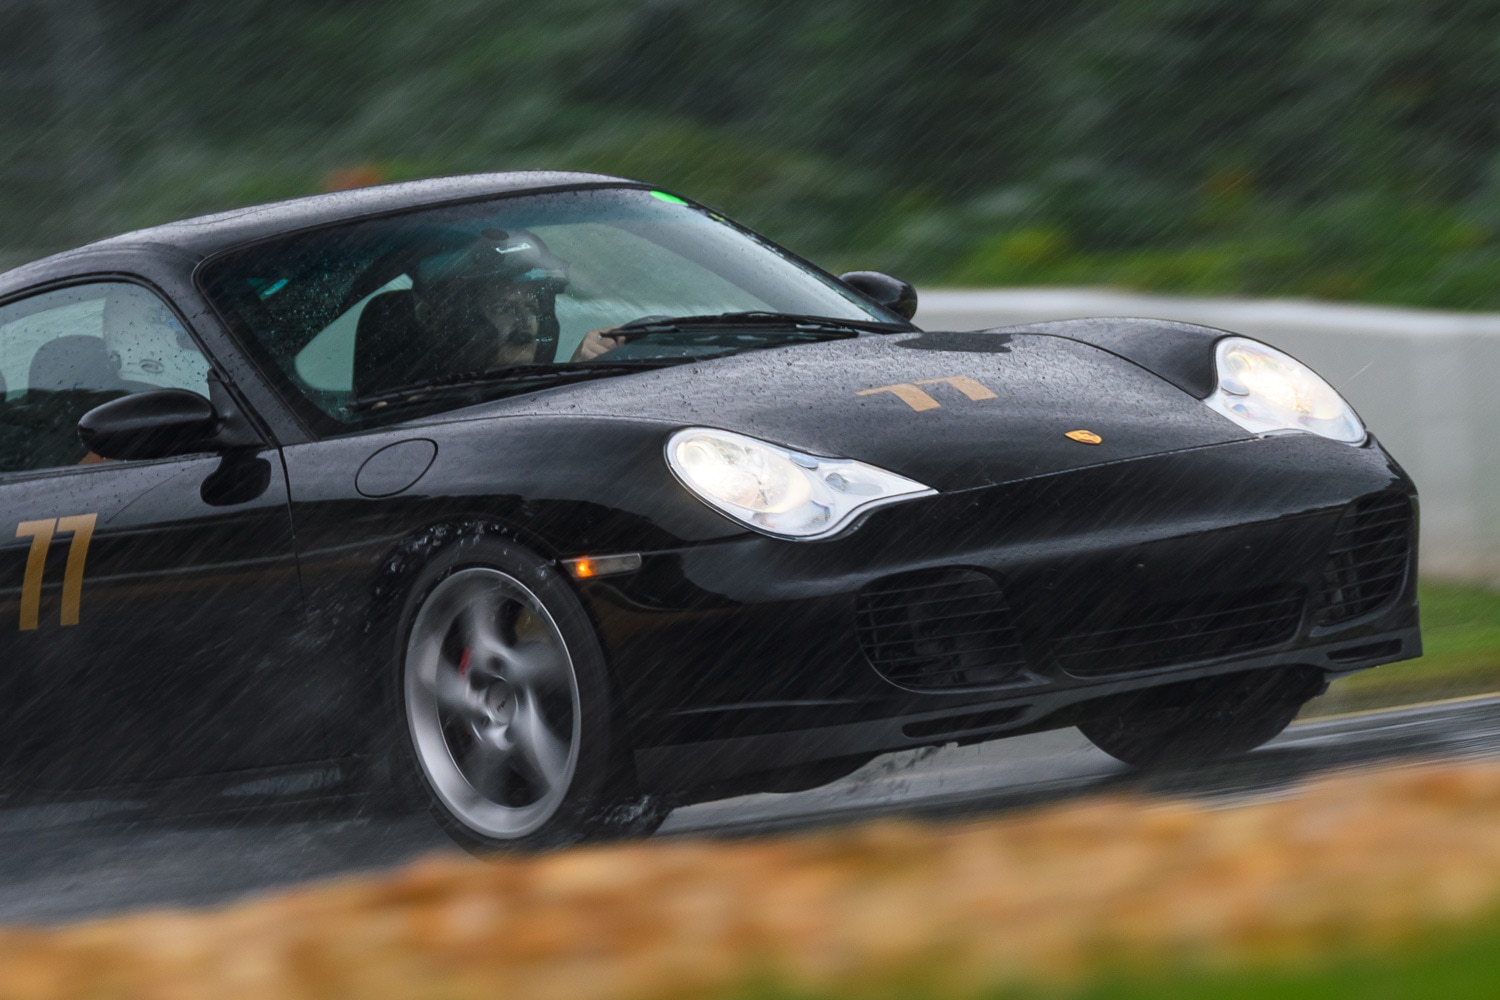 Person wearing a helmet driving a black Porsche in the rain.